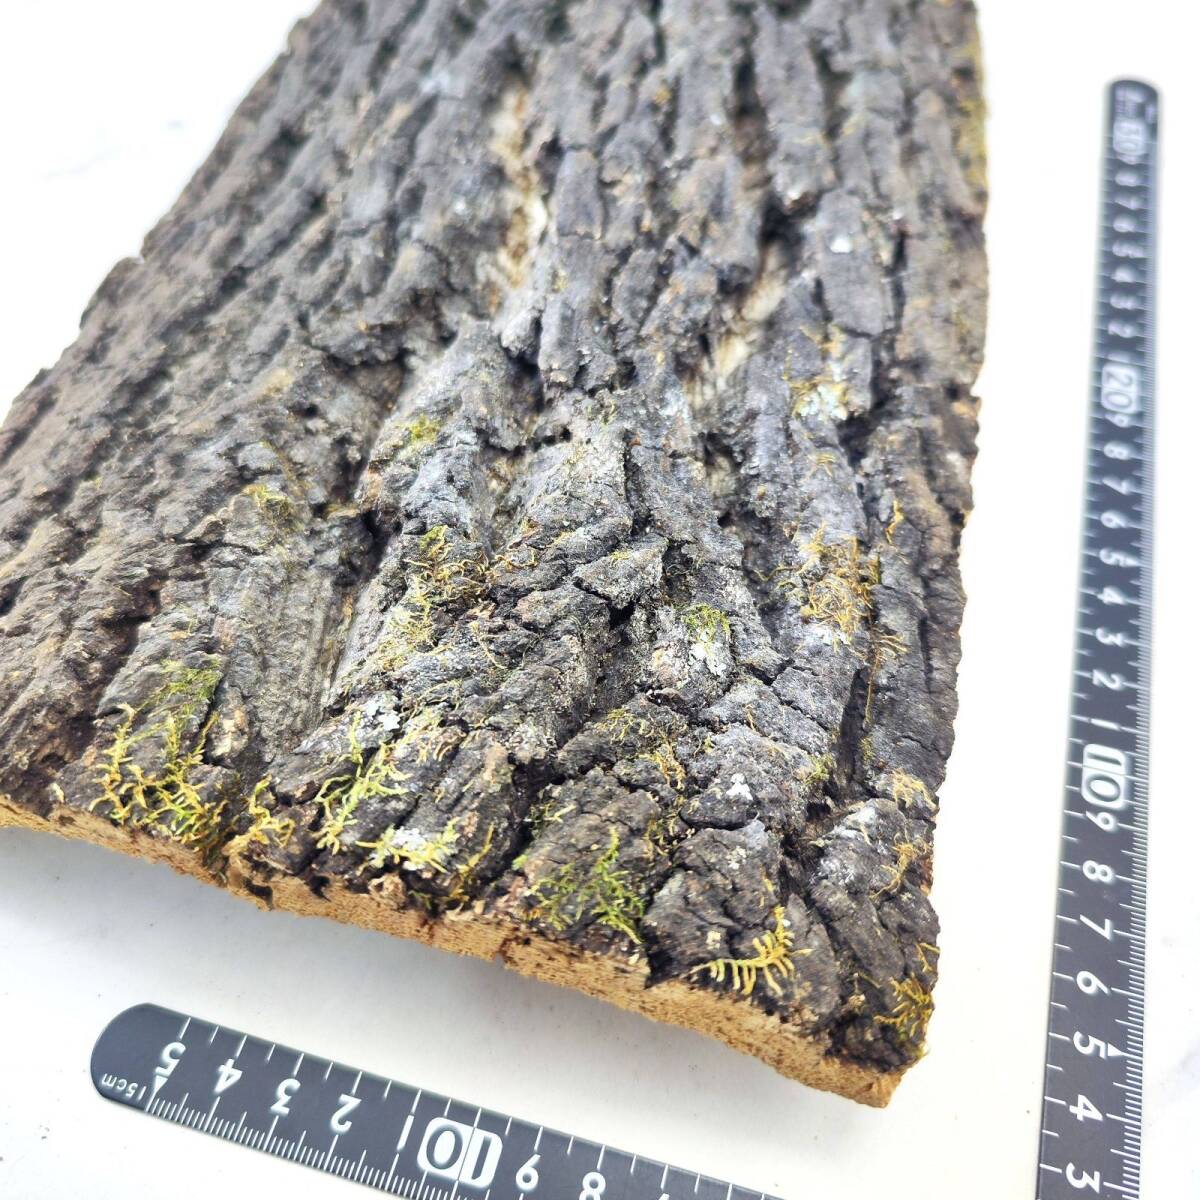 c1026[20×30cm] cork . leather cork board bar Gin cork drilling / free shipping chi Ran jia staghorn fern put on raw Ran amphibia reptiles staghorn fern 